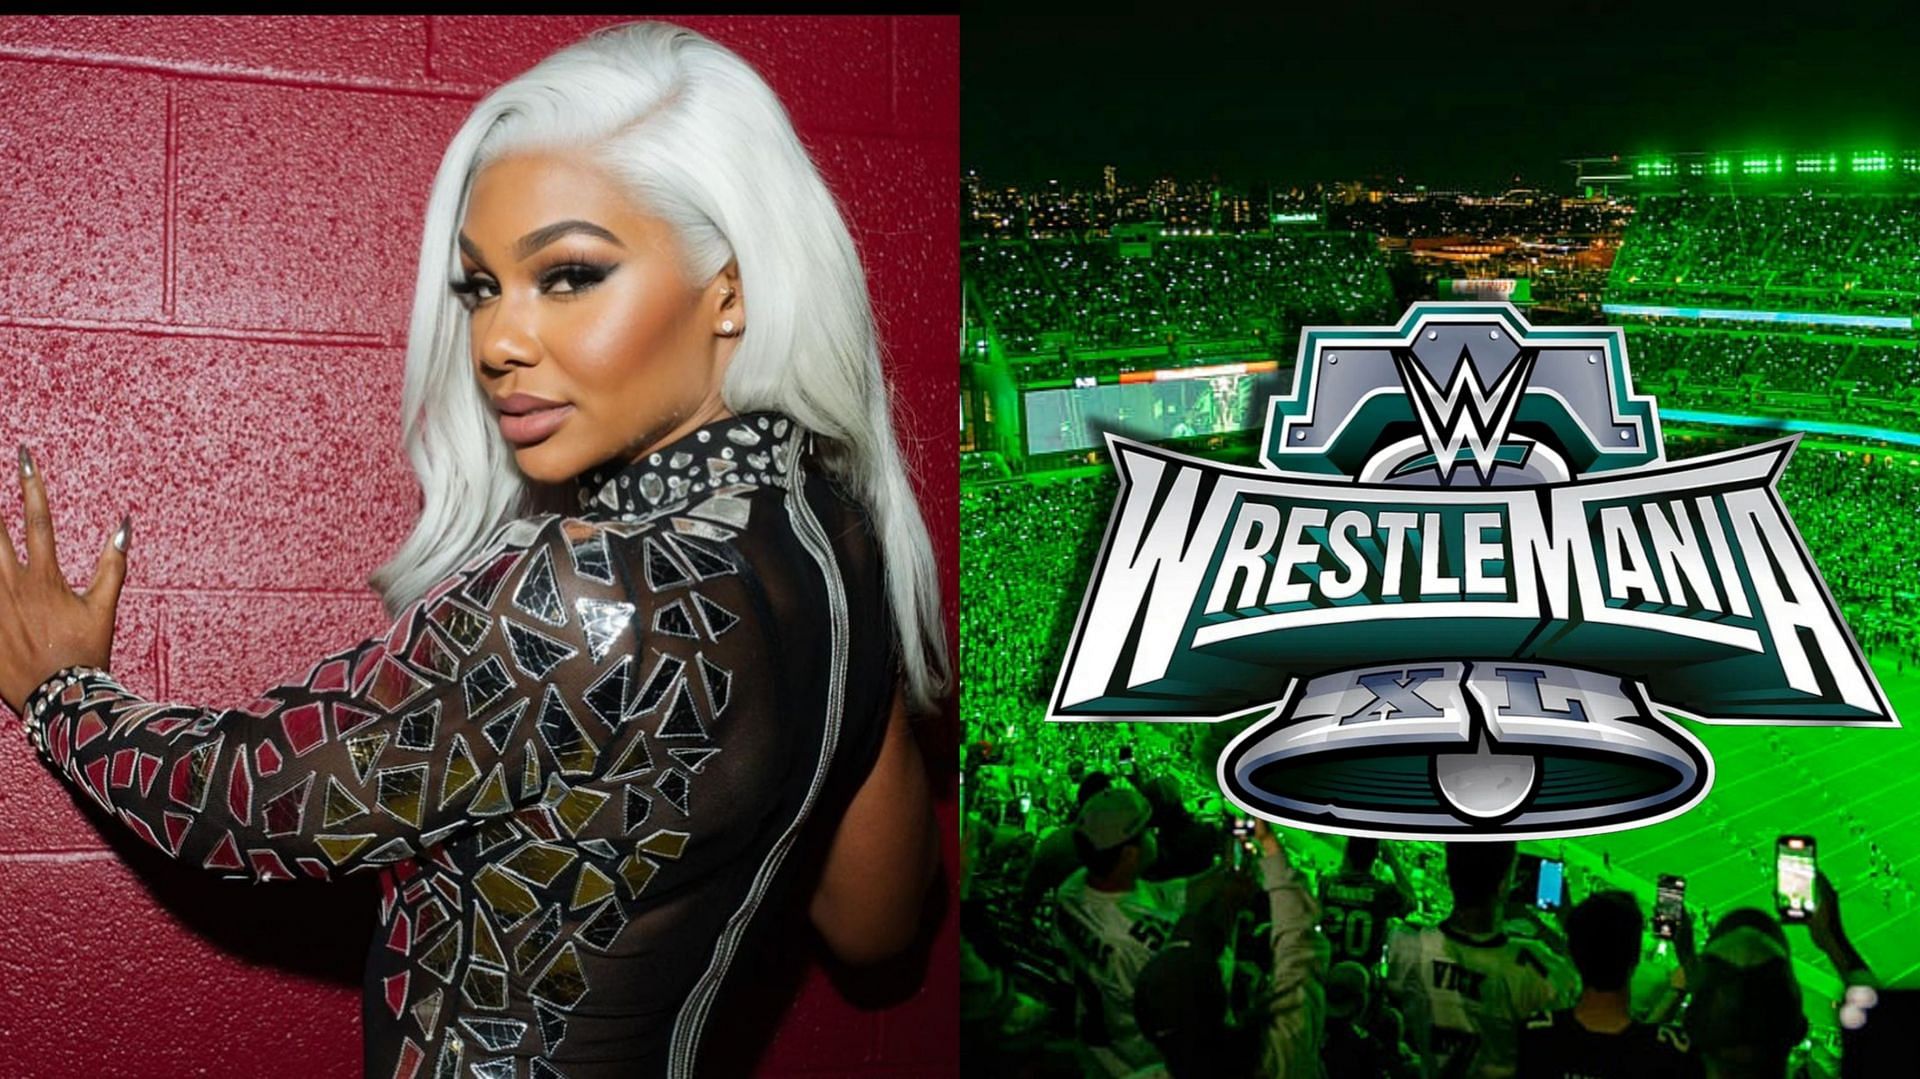 Jade Cargill has no match at WrestleMania XL